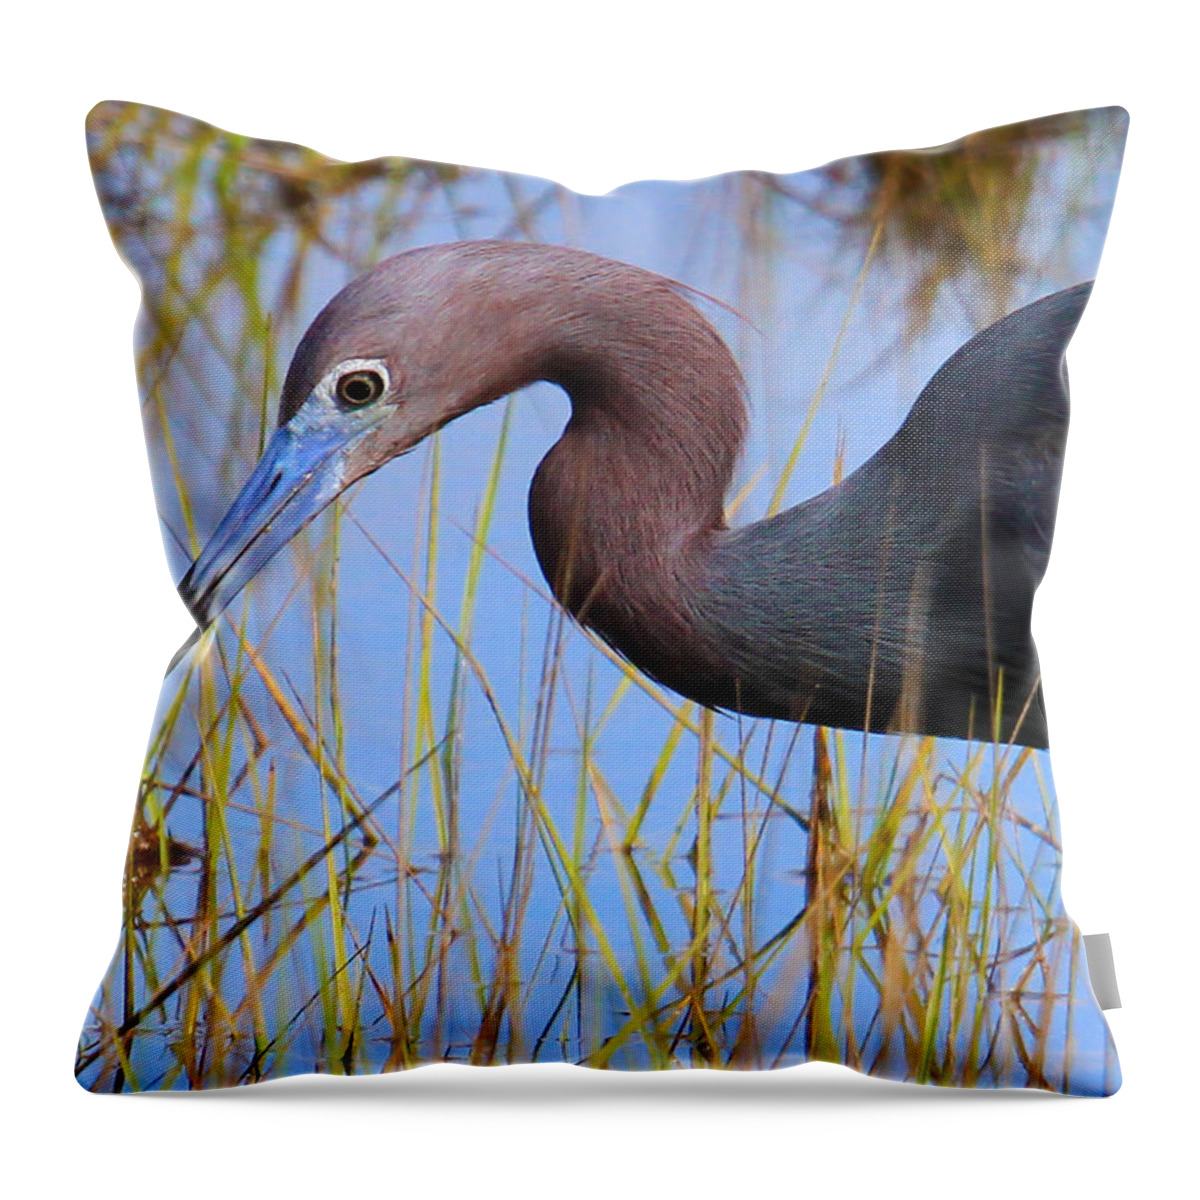 Heron Throw Pillow featuring the photograph Little Blue Heron by Roger Becker